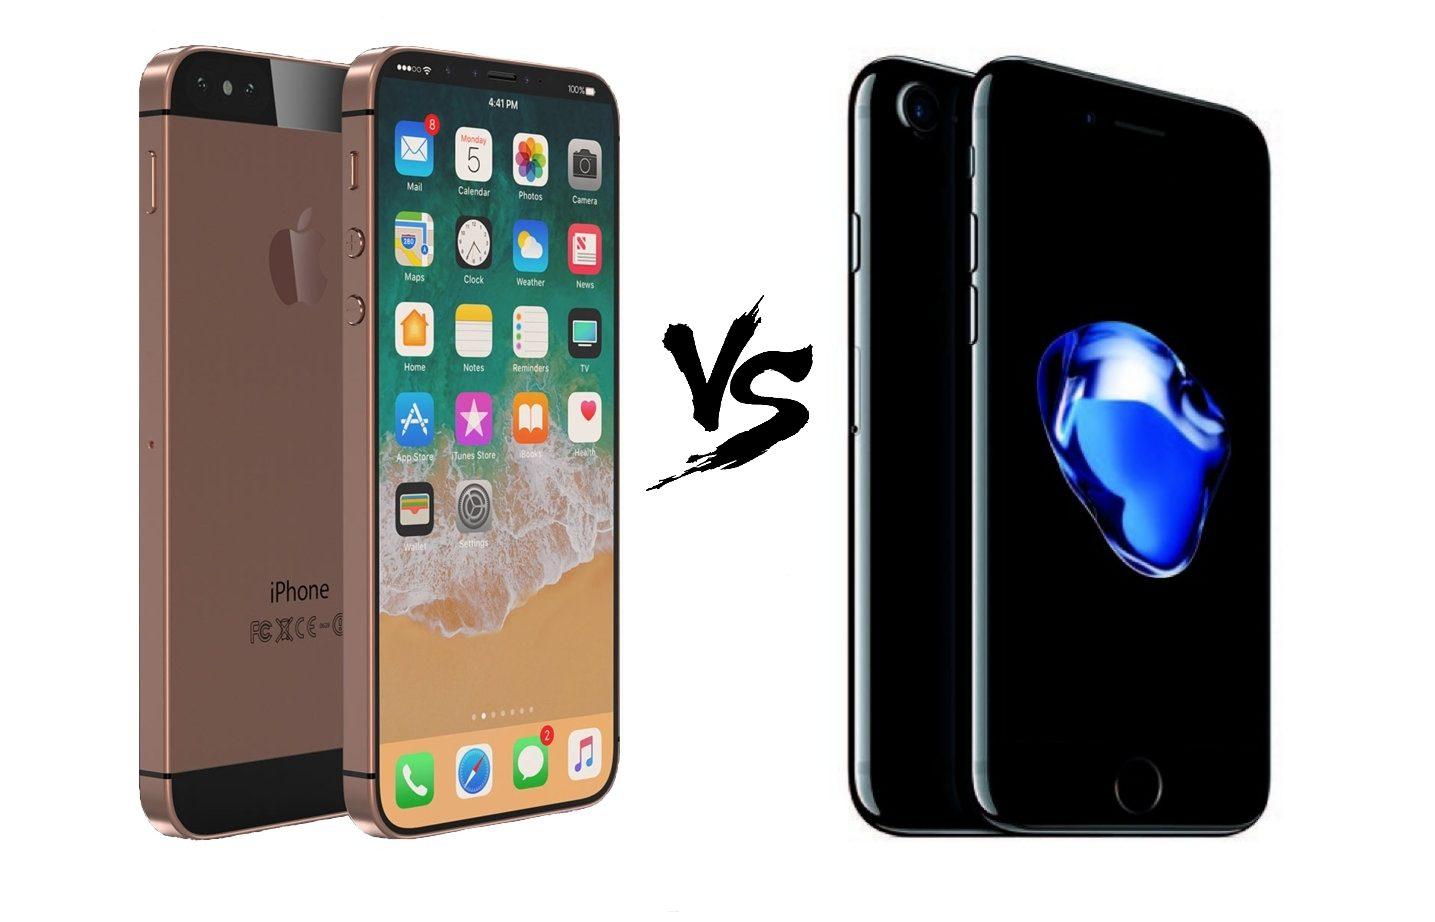 iPhone SE 2 vs iPhone 7